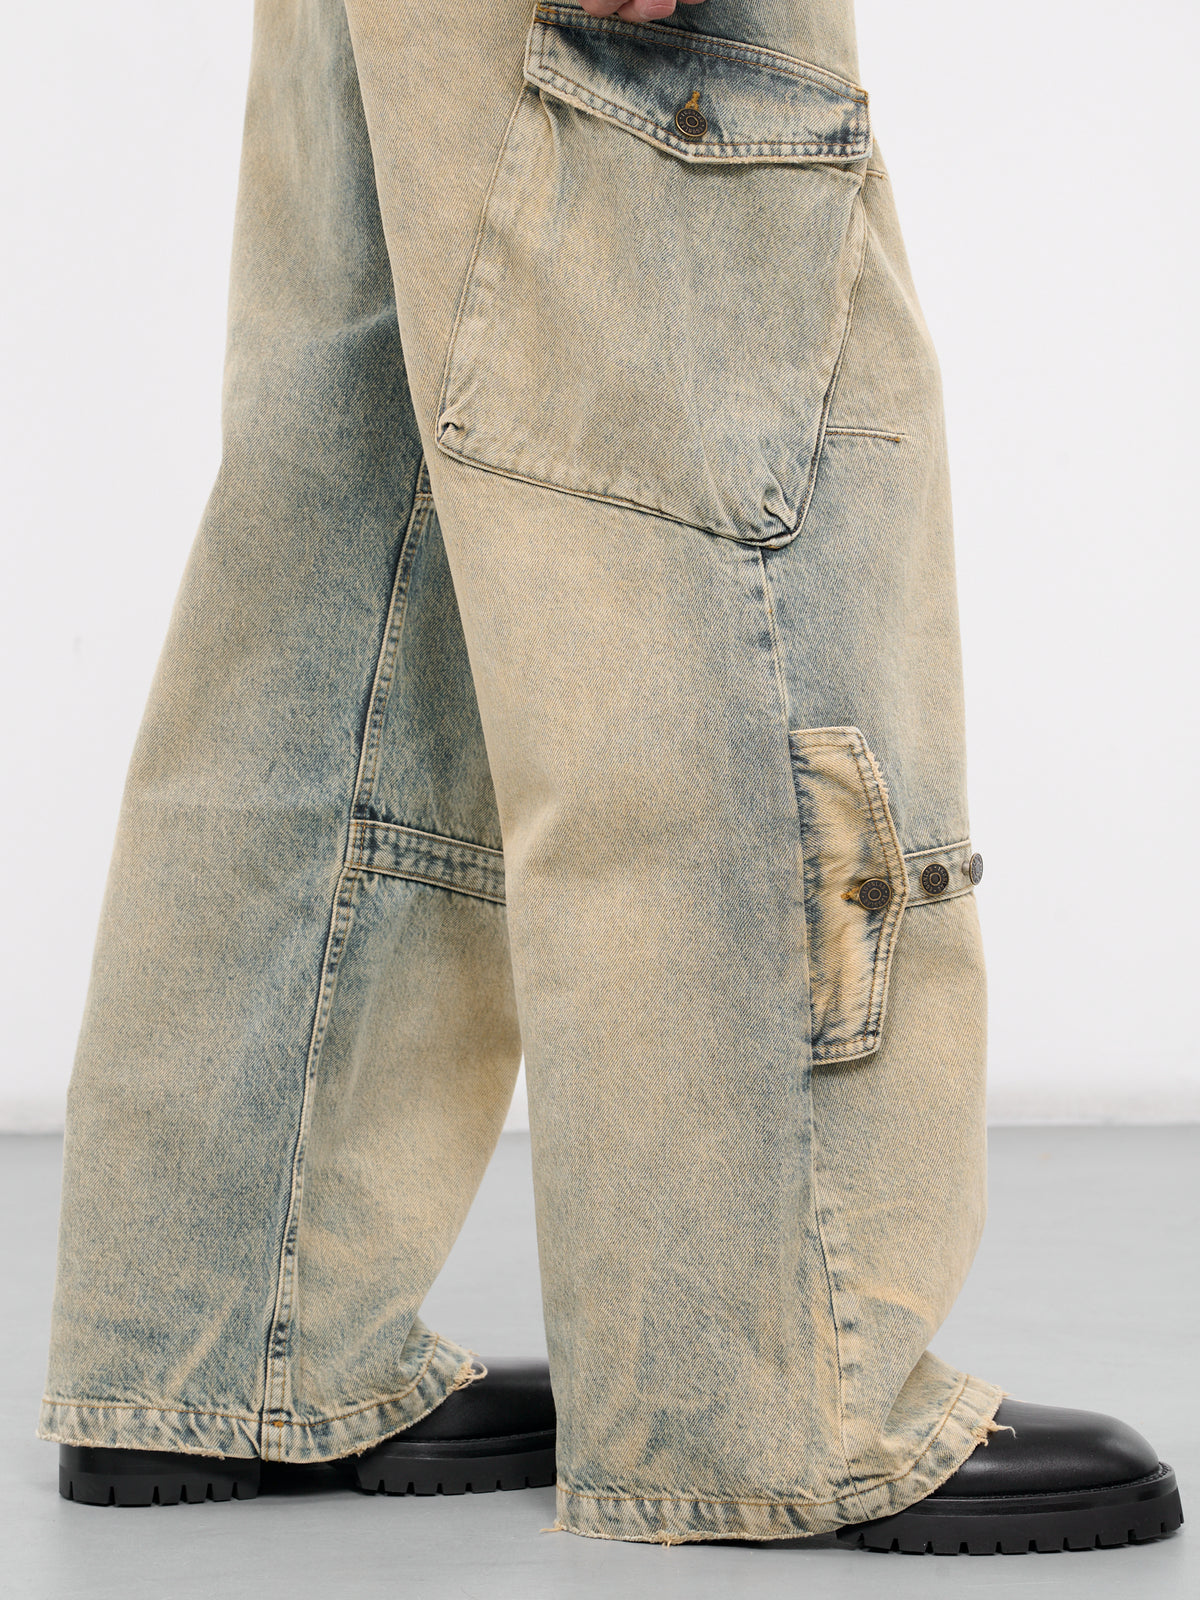 Stonewashed Jeans (DN-001-B-CHAMPAGNE-STONEWASHED)